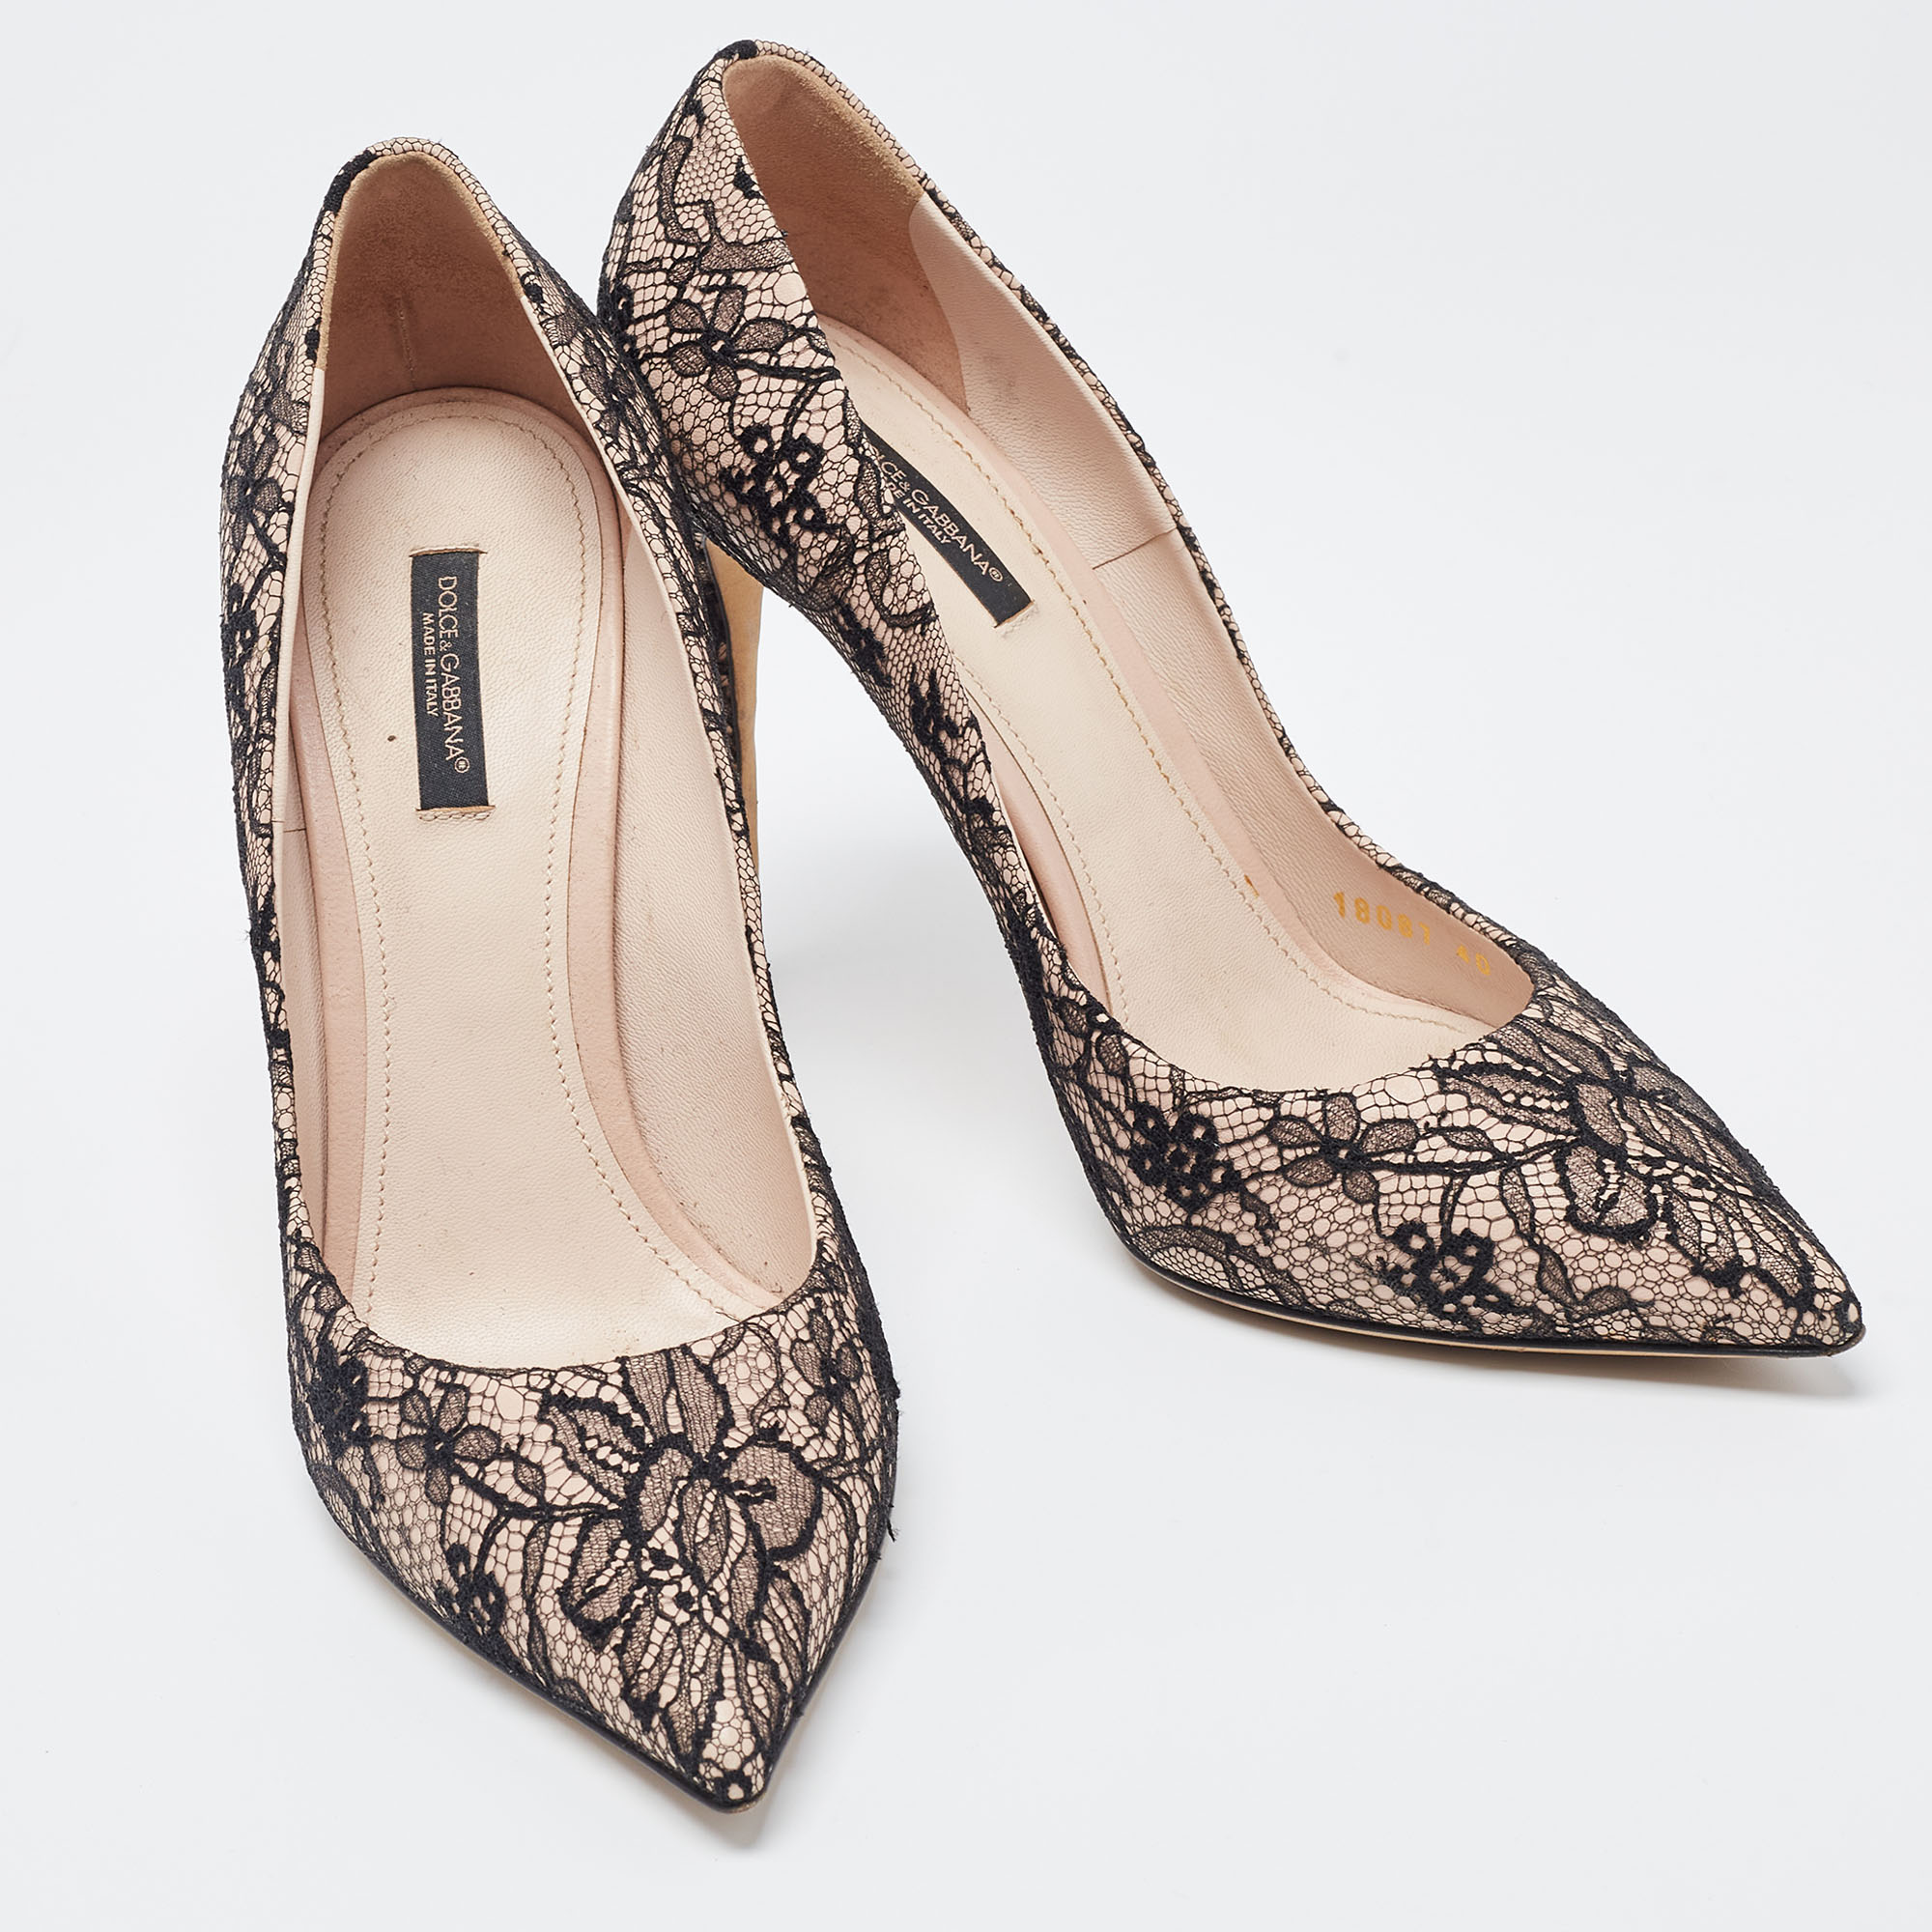 Dolce & Gabbana Black/Beige Floral Lace Pointed Toe Pumps Size 40